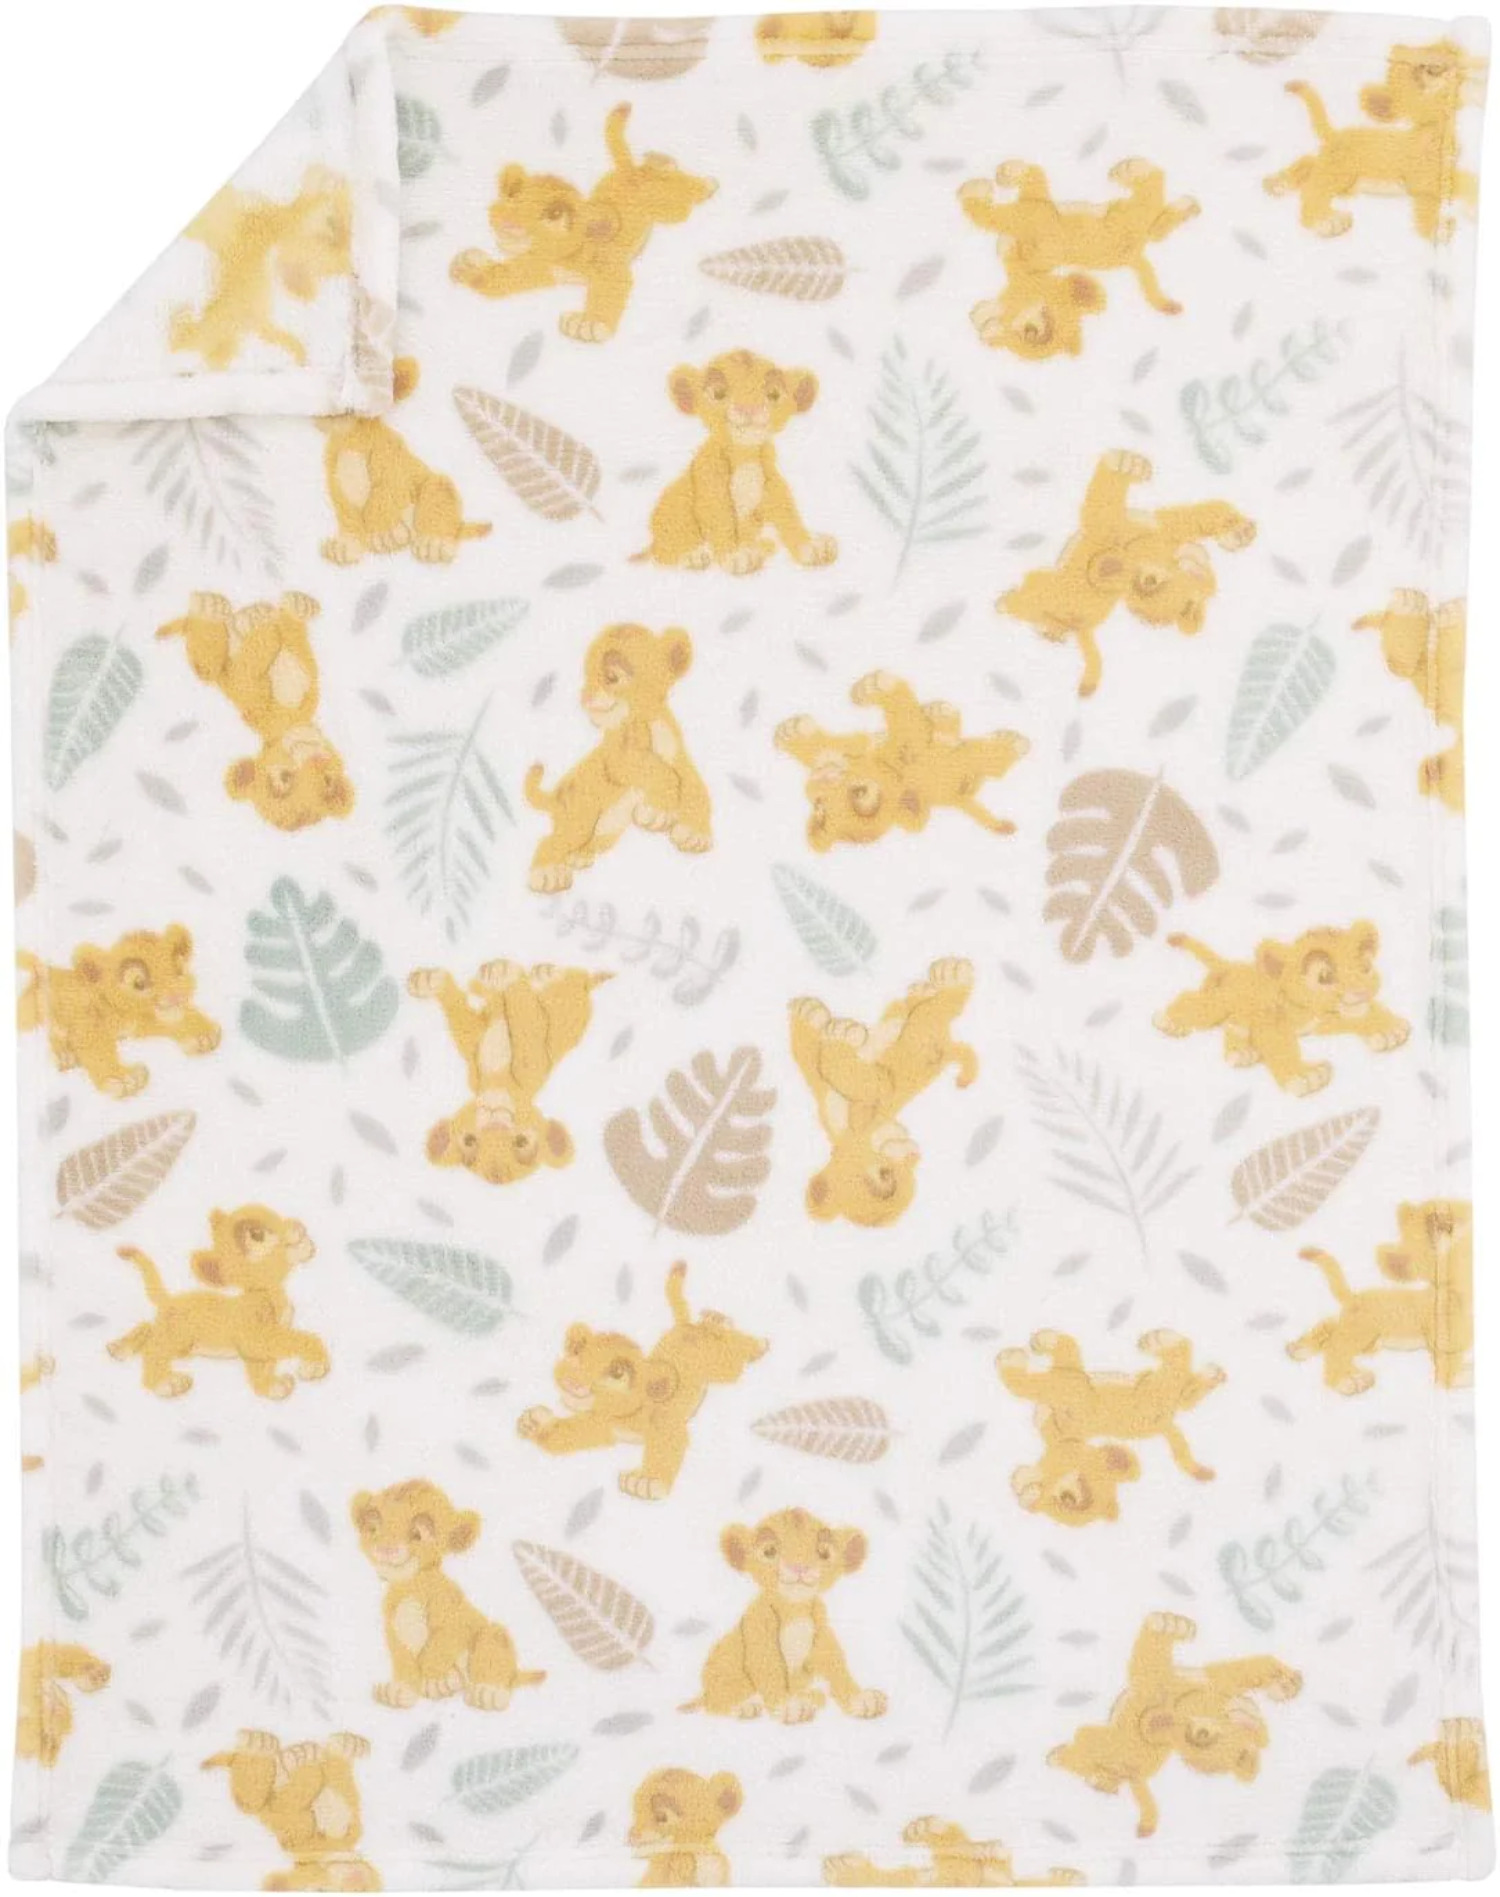 Disney Lion King French Fiber Baby Blanket - image 2 of 2